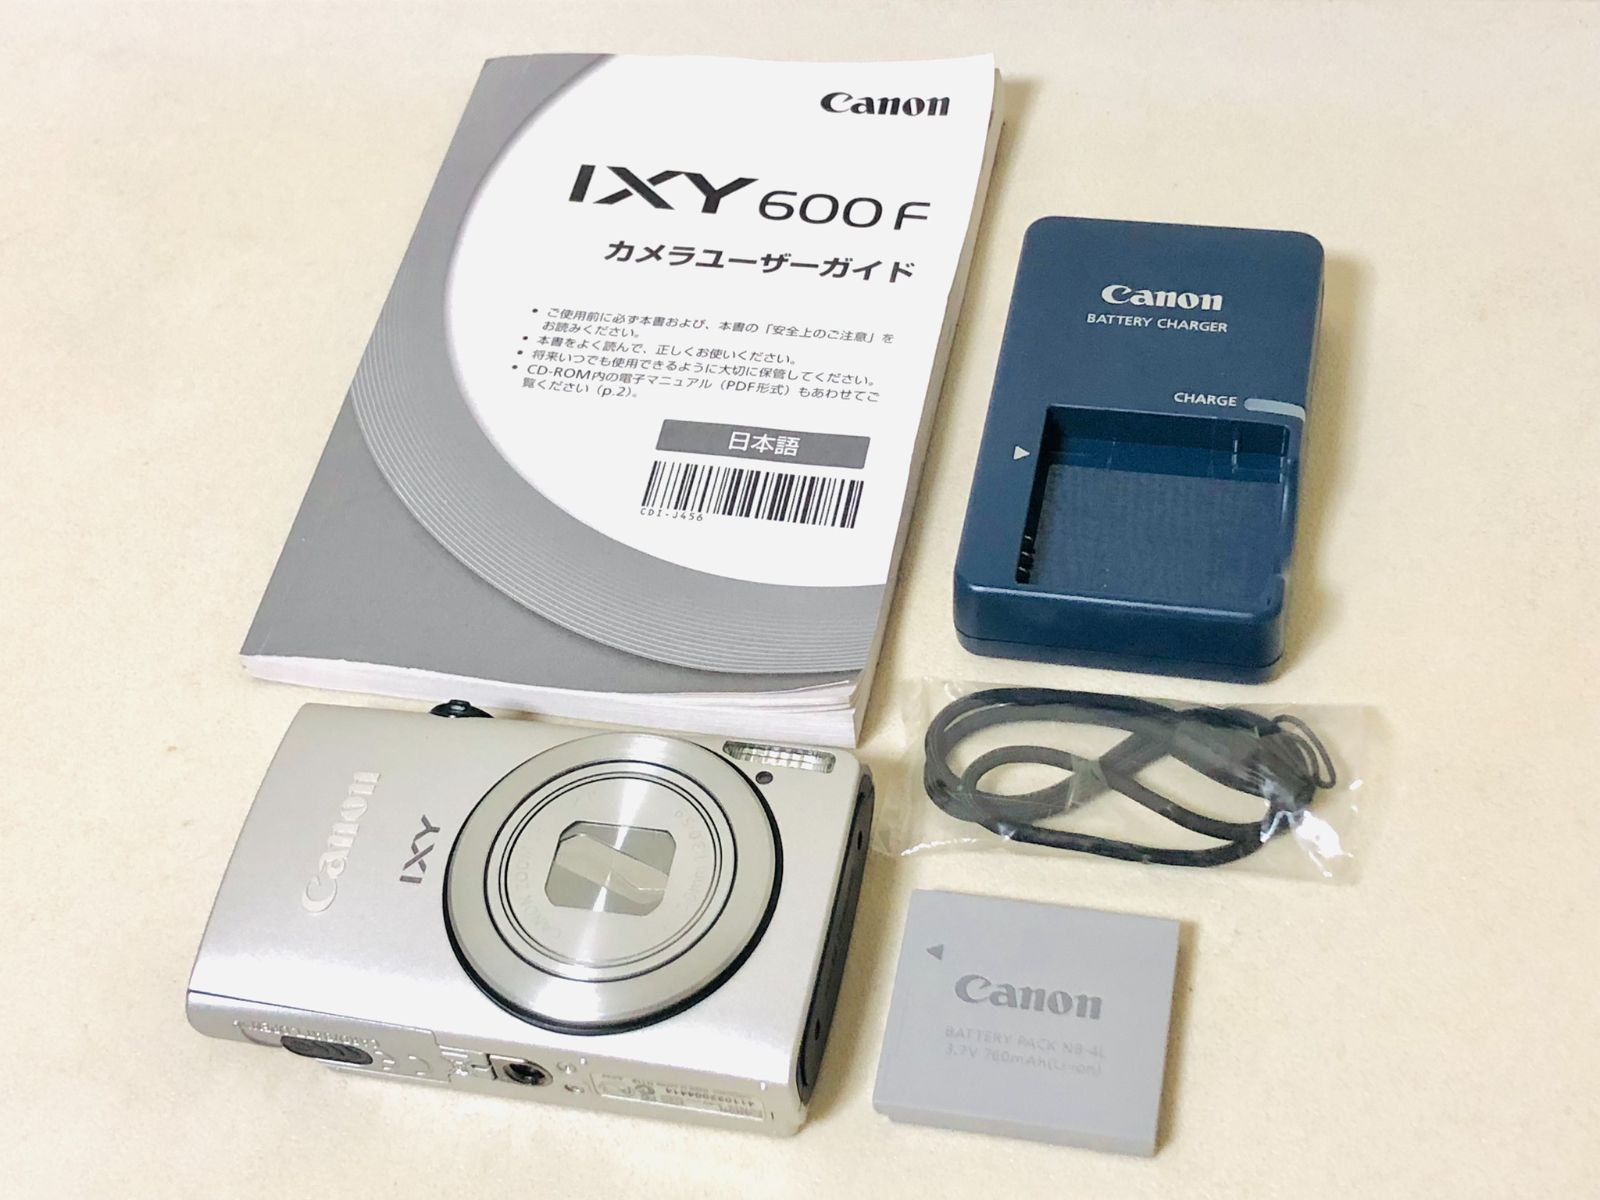 Canon IXY 600F シルバー キャノン デジタルカメラ - LIFE SHOP - メルカリ